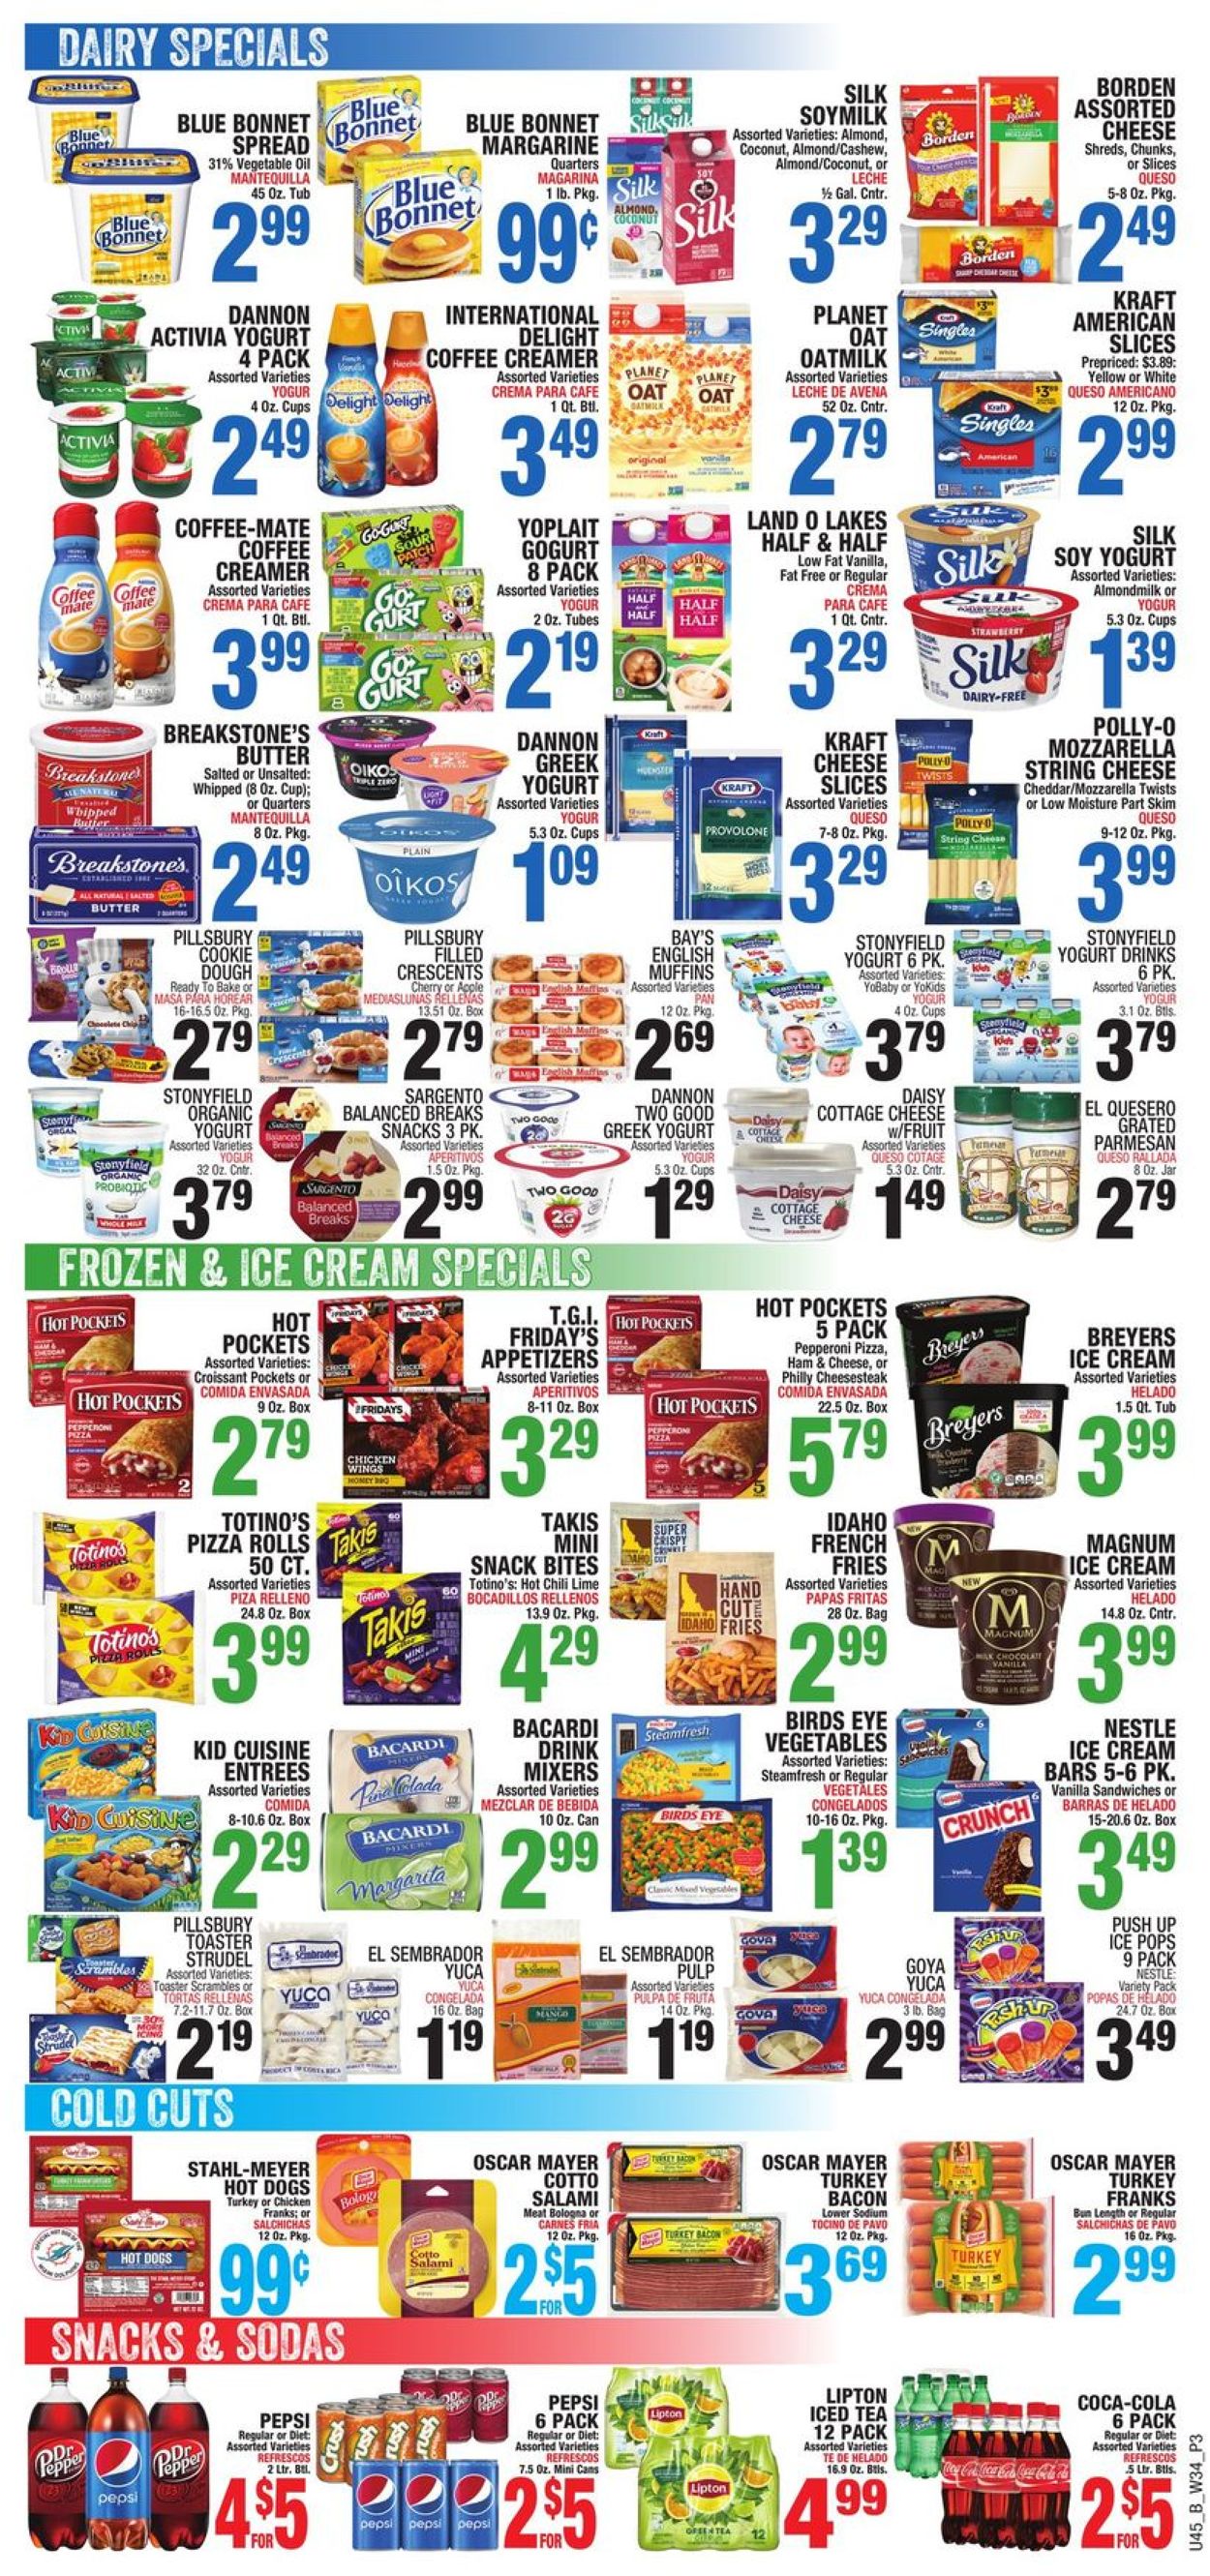 Catalogue Bravo Supermarkets from 08/19/2021